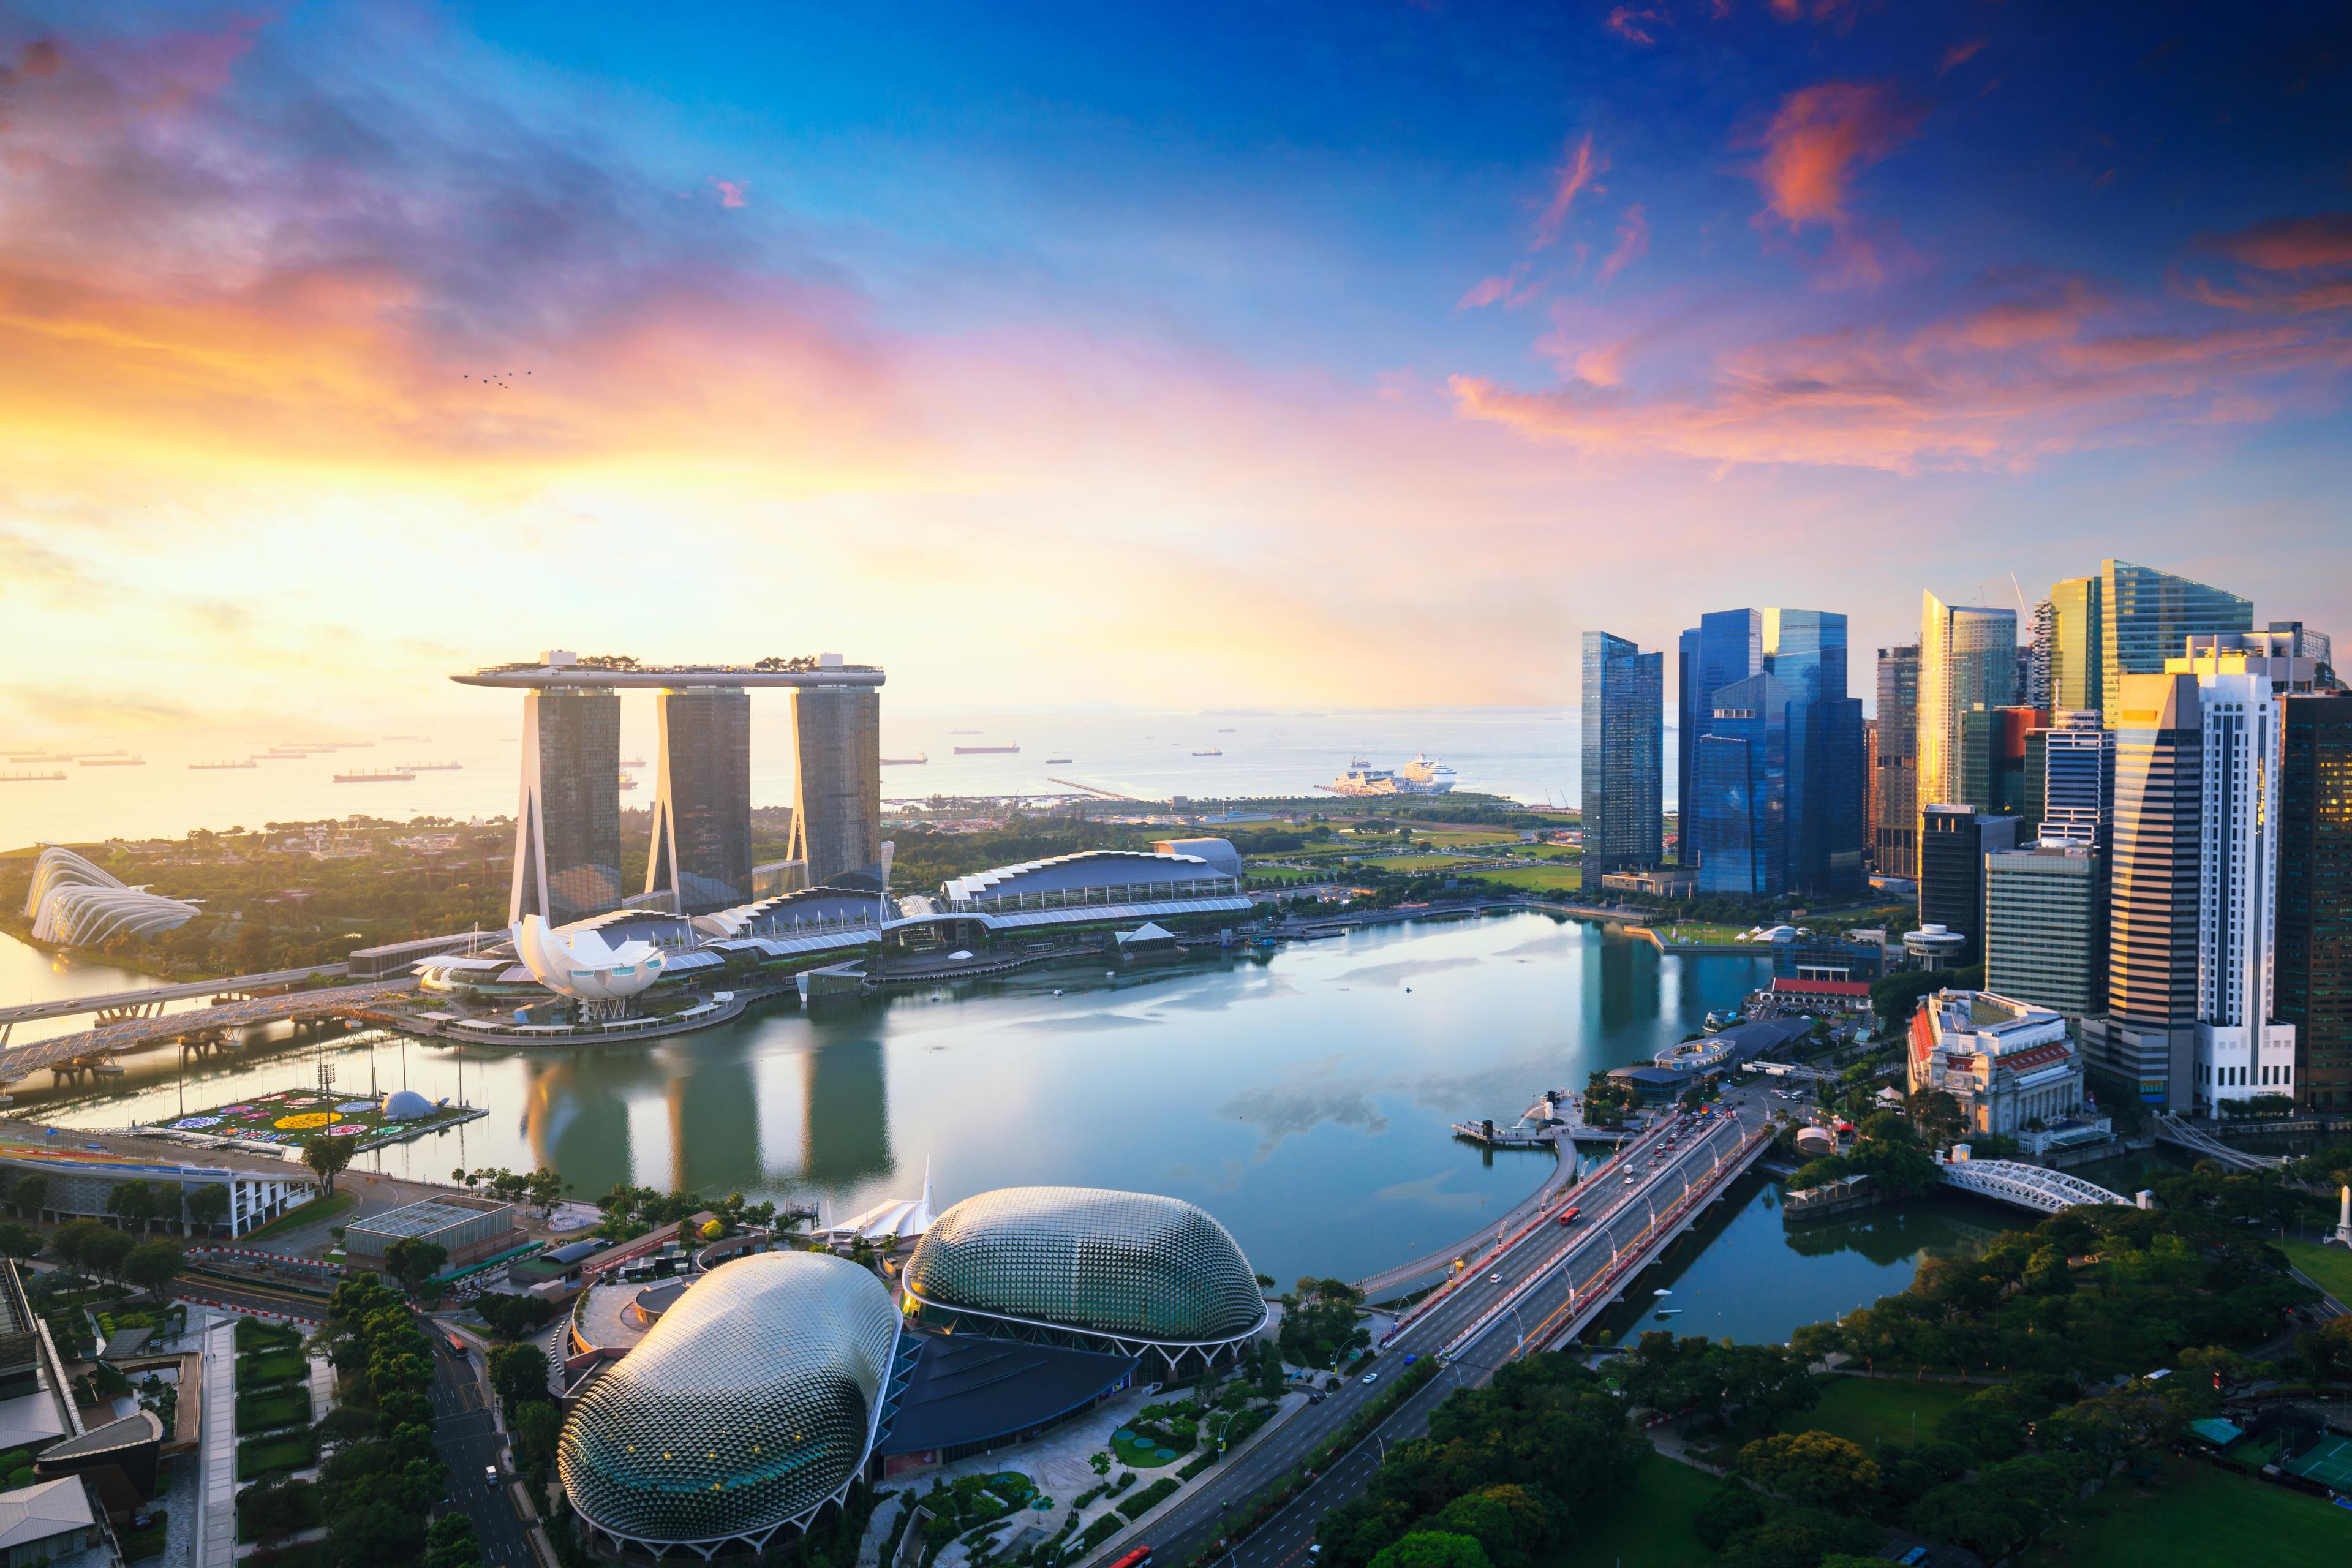 The Singapore city, cover photo